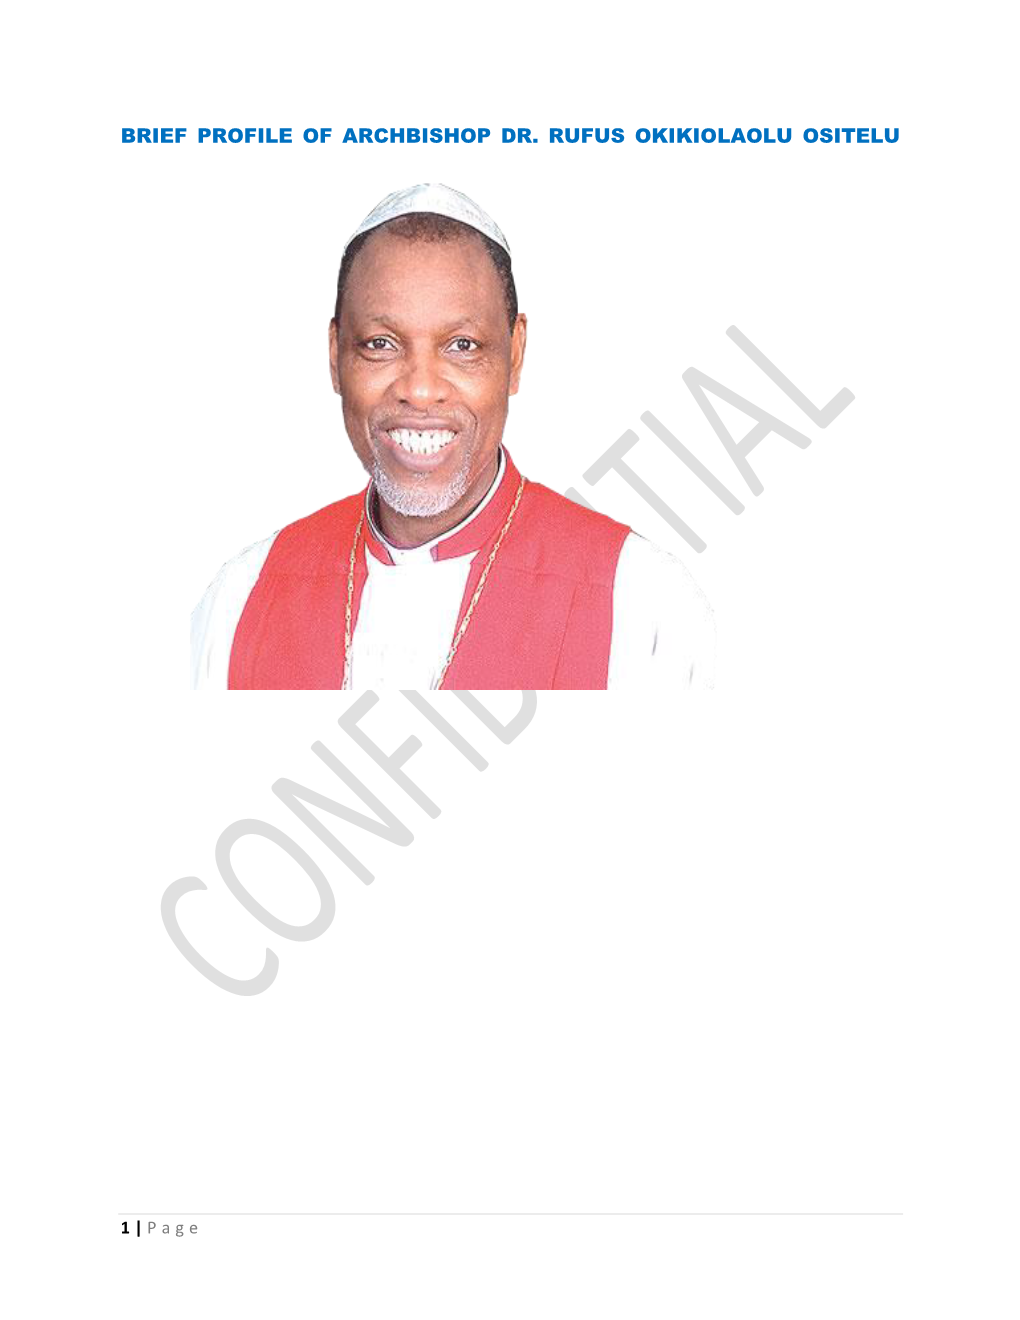 Brief Profile of Archbishop Dr. Rufus Okikiolaolu Ositelu